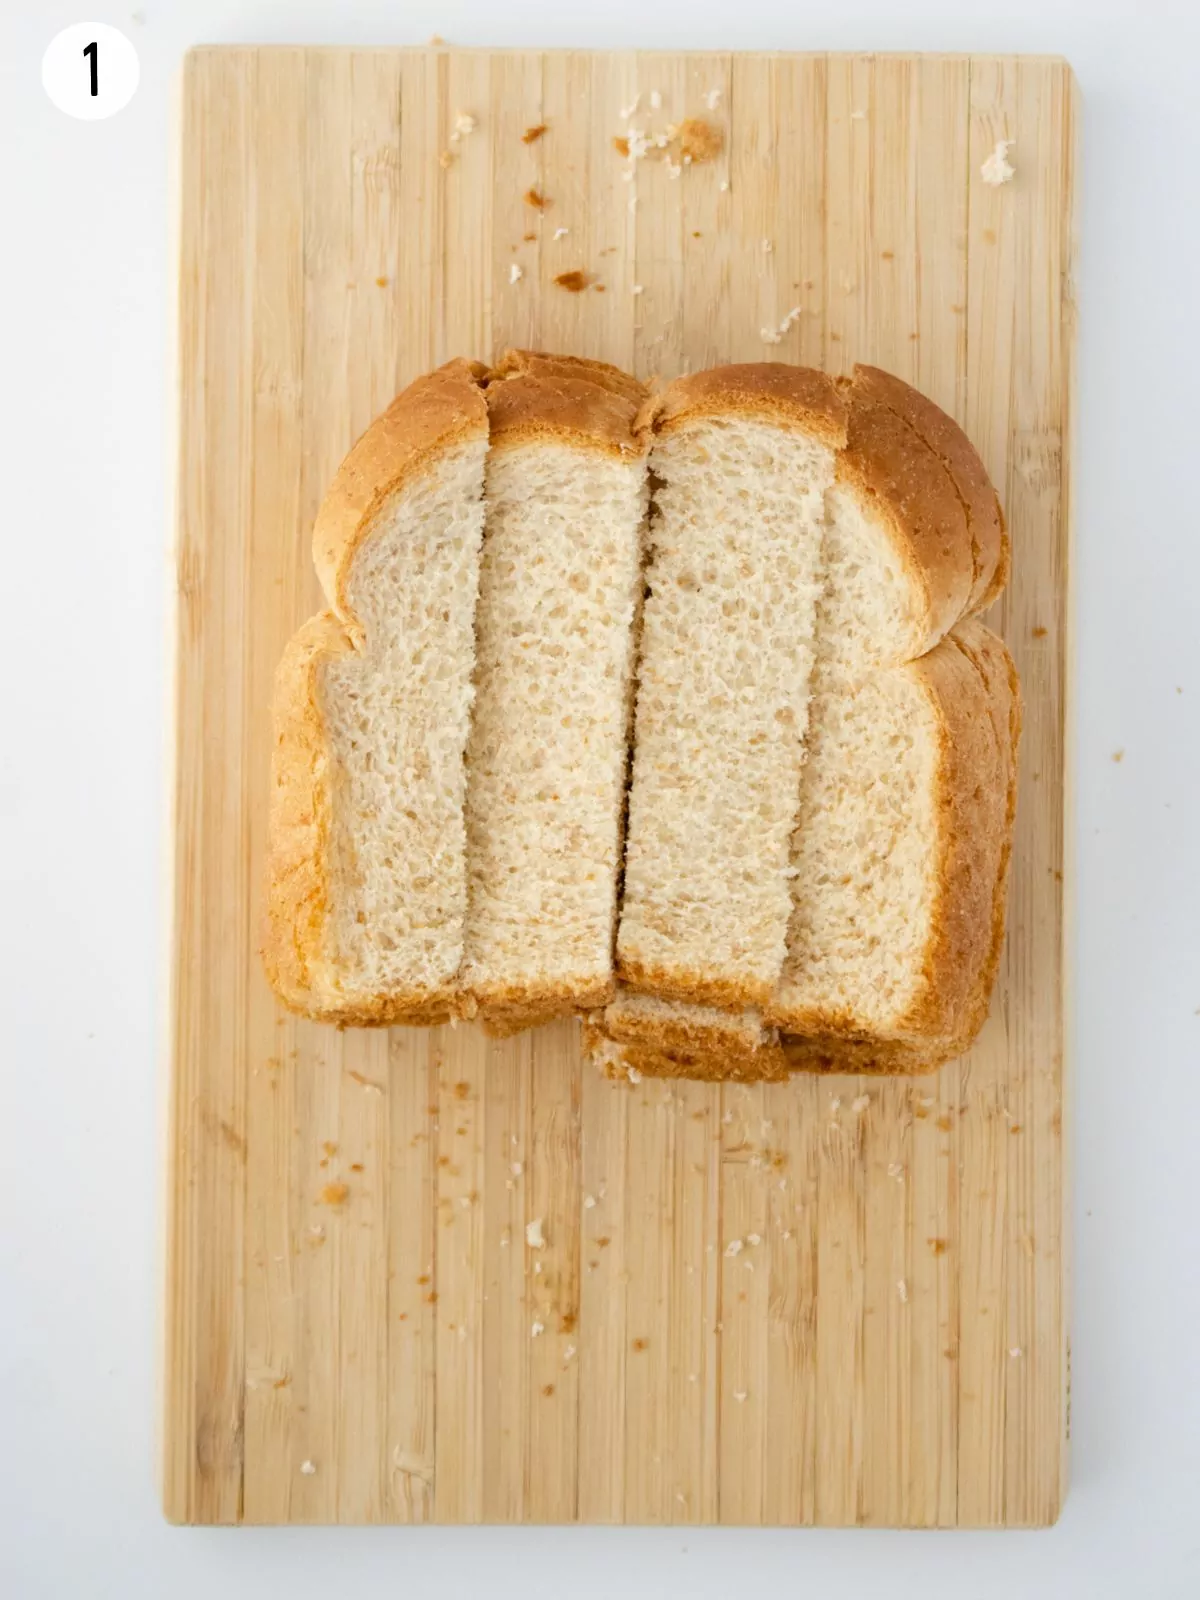 Sandwich bread sliced into 4 pieces on cutting board.